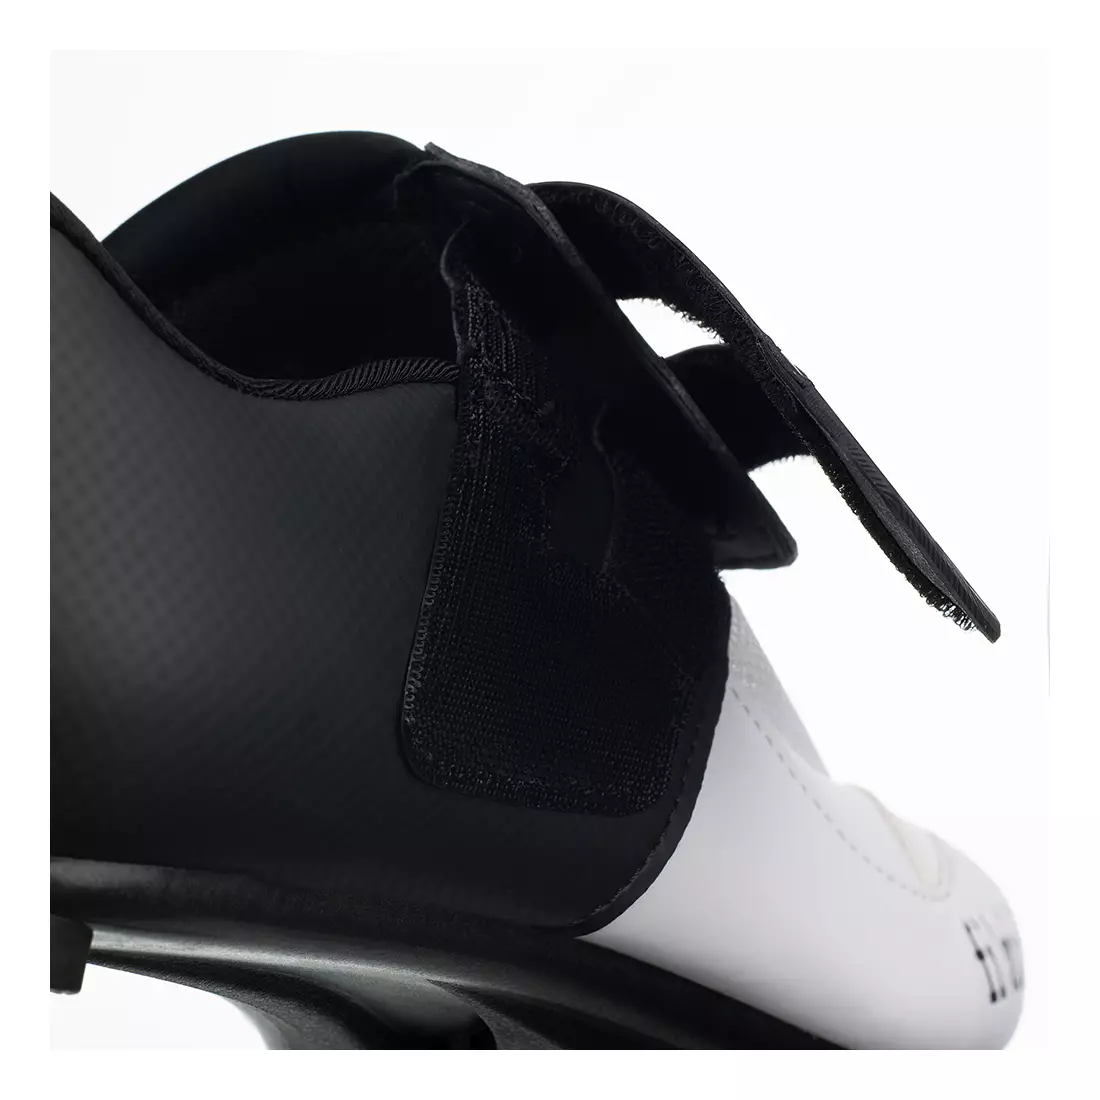 Pantofi de ciclism de triatlon FIZIK TRANSIRO POWERSTRAP R4 alb negru